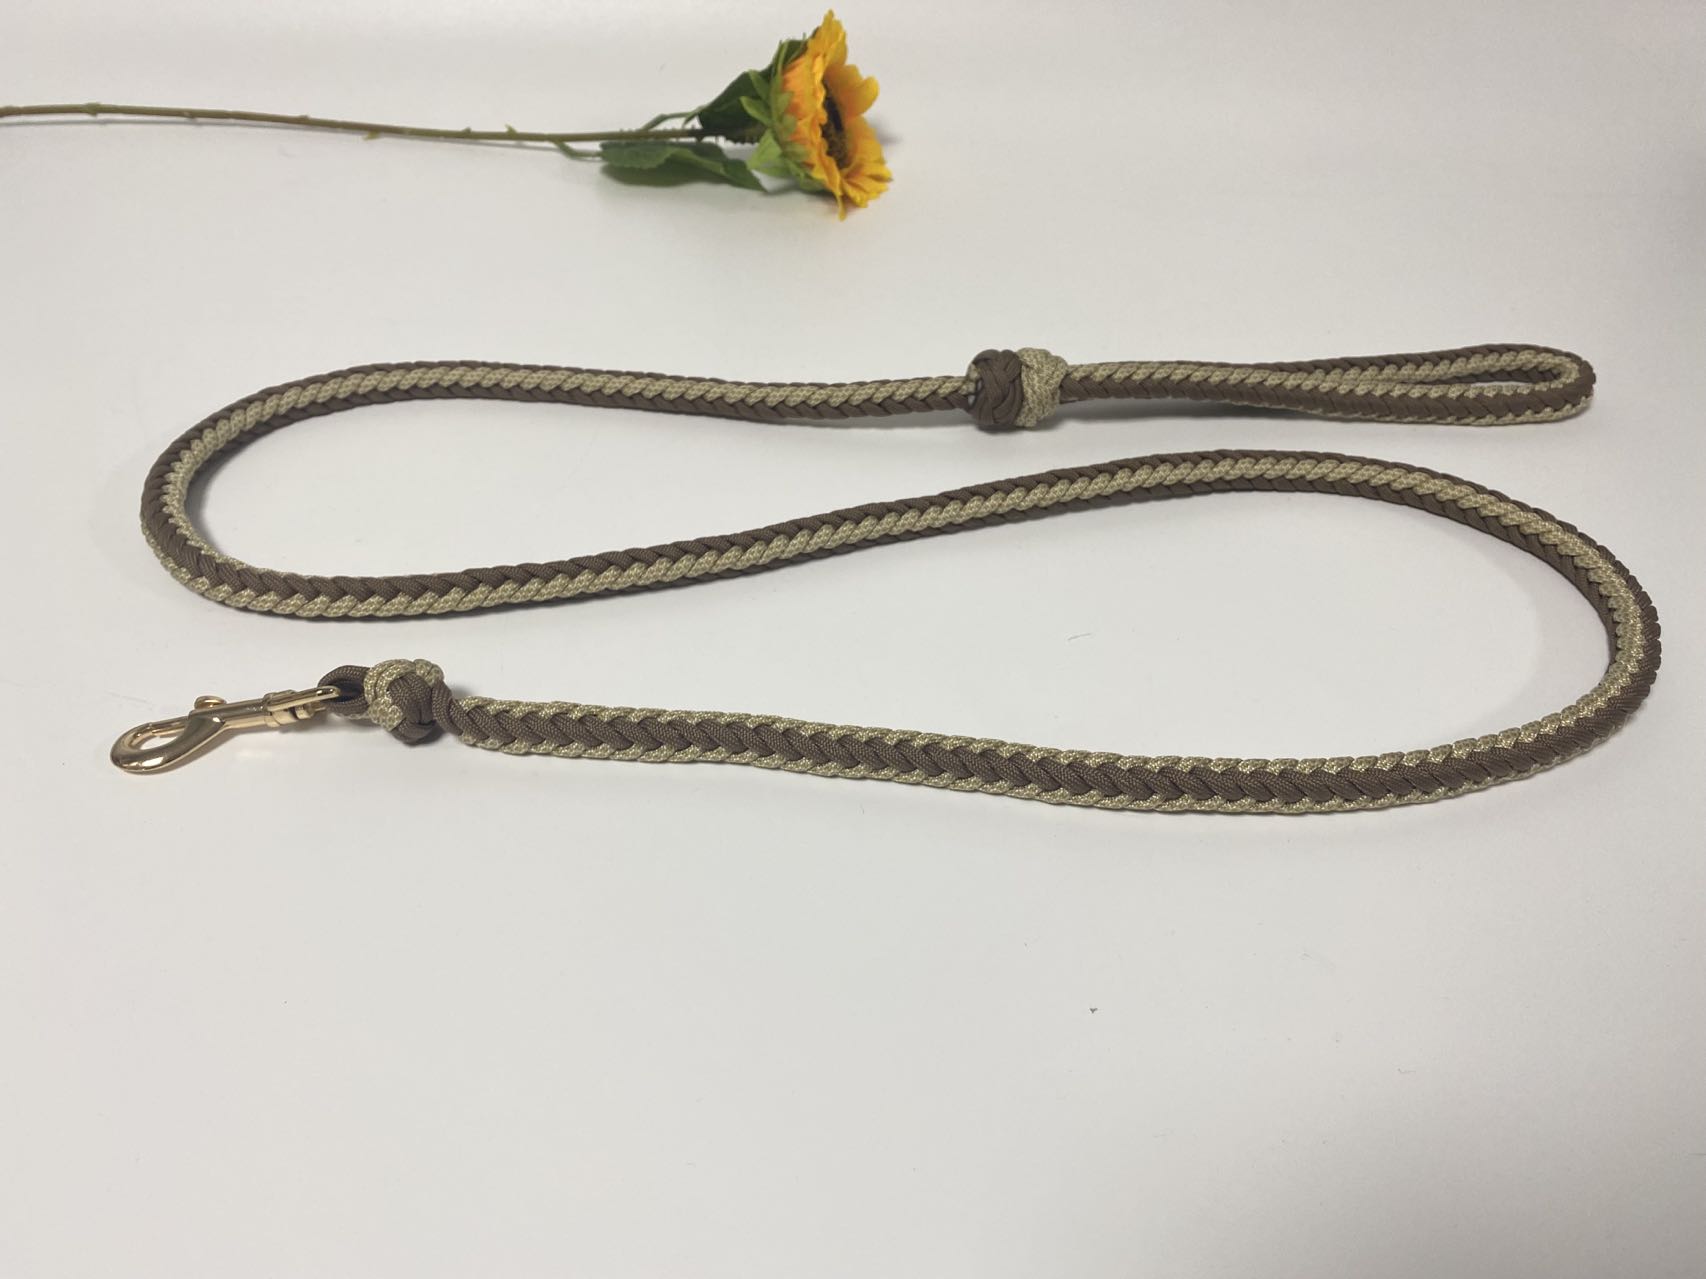 Pet Uiscedhíonach Rope Leash